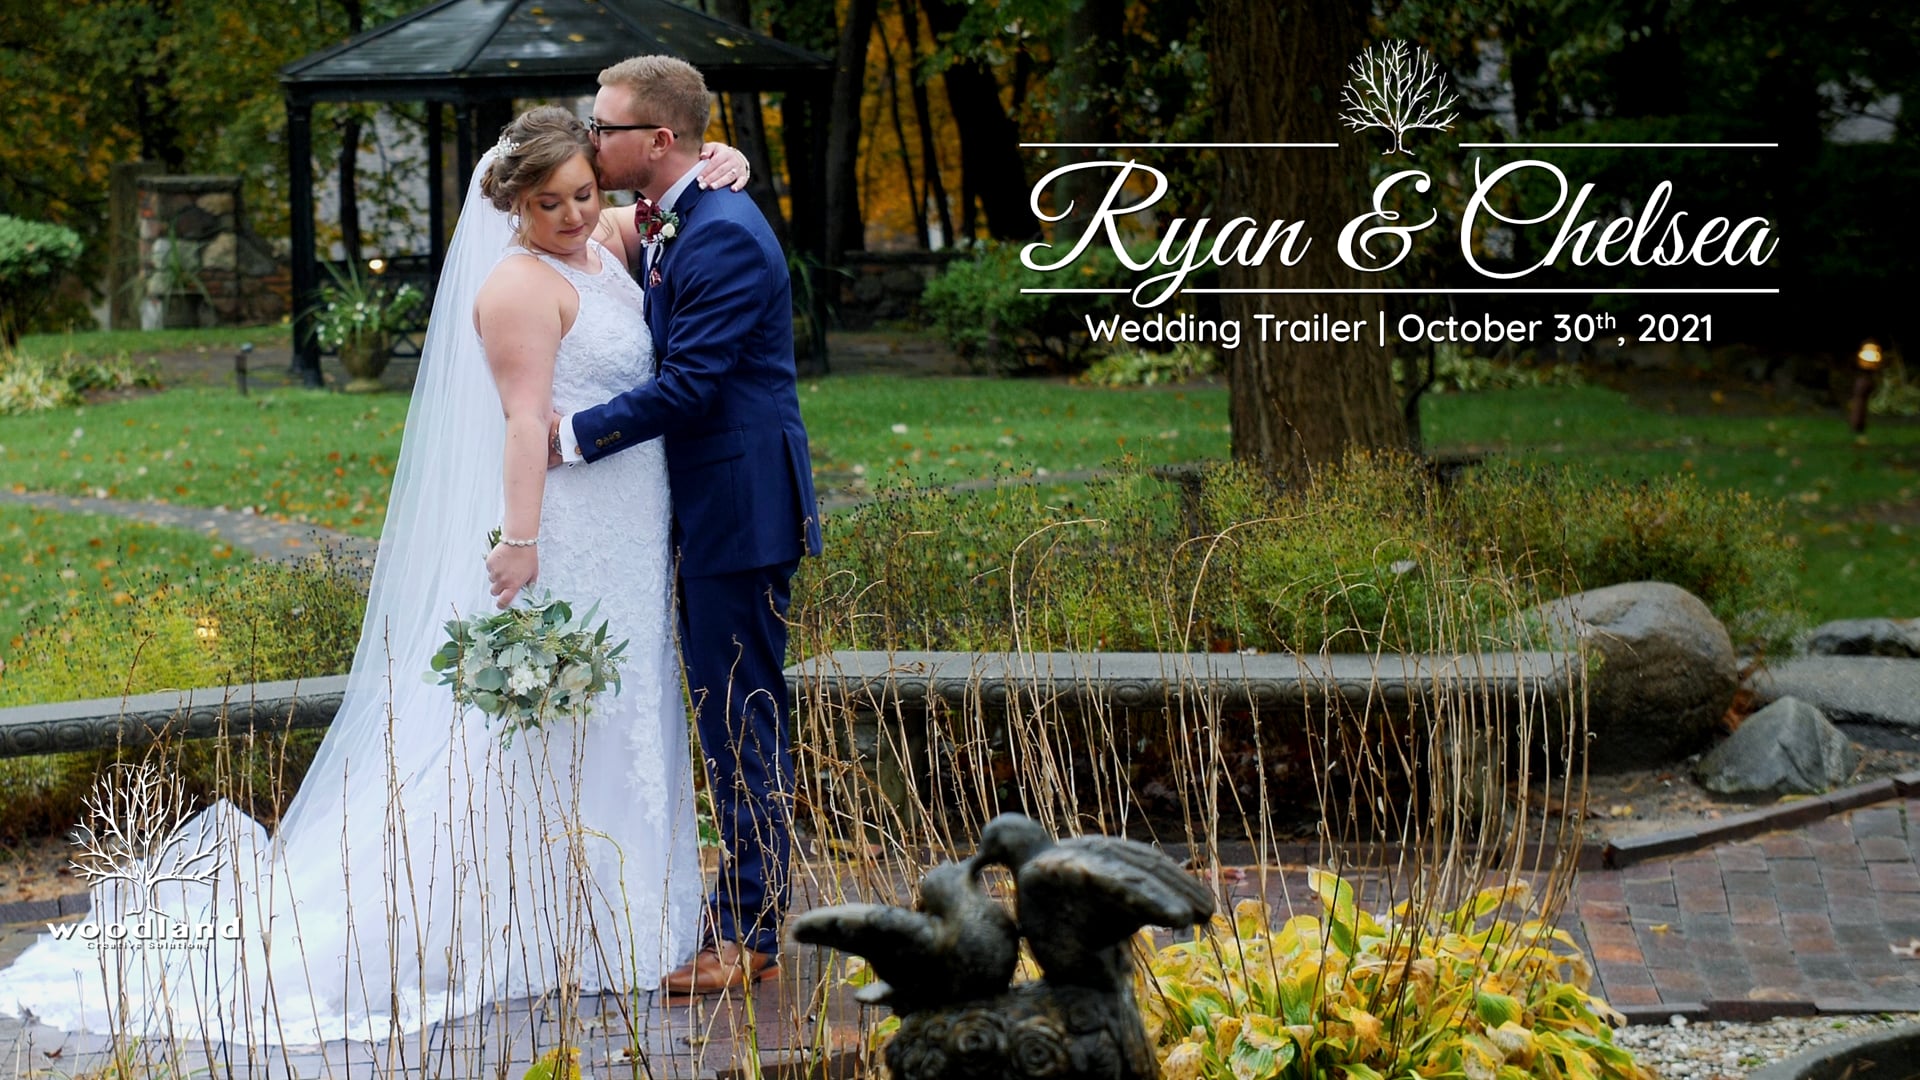 Ryan & Chelsea - Wedding Trailer